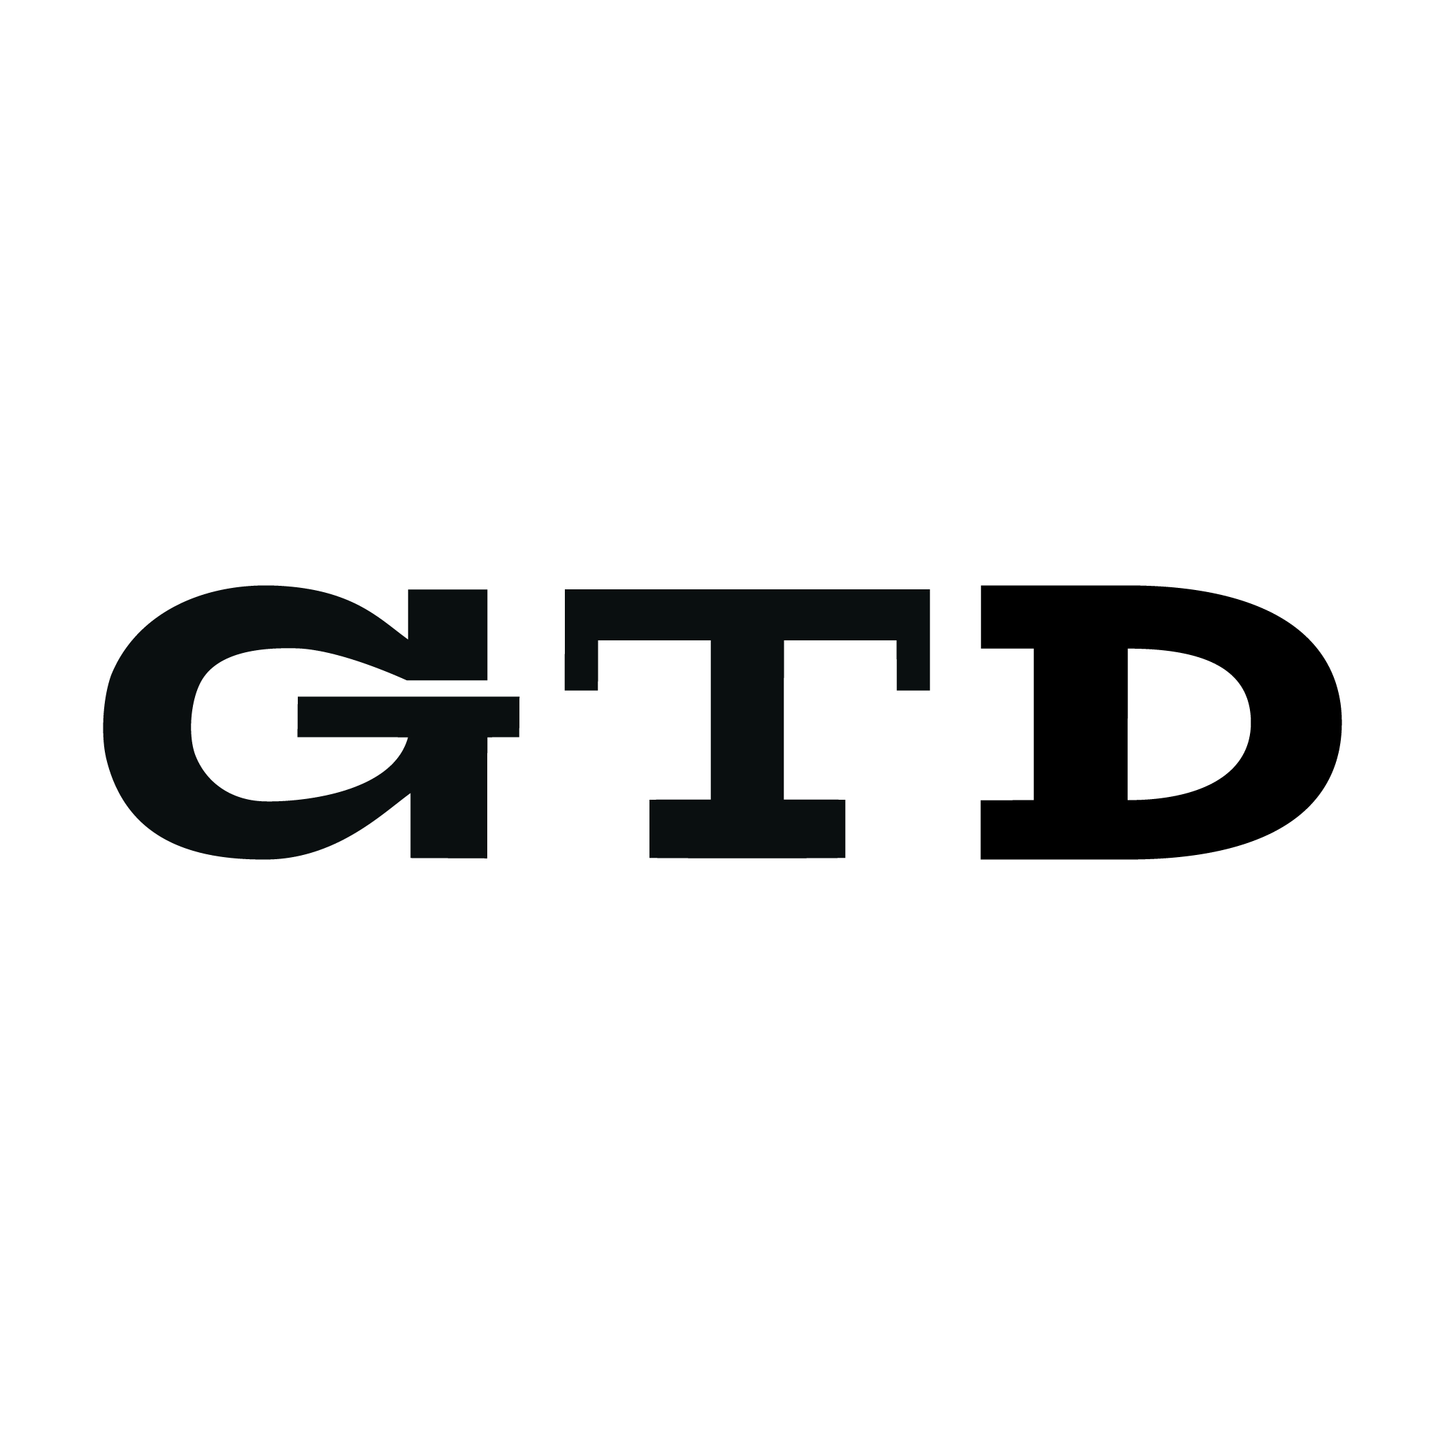 VW "GTD" logo decal